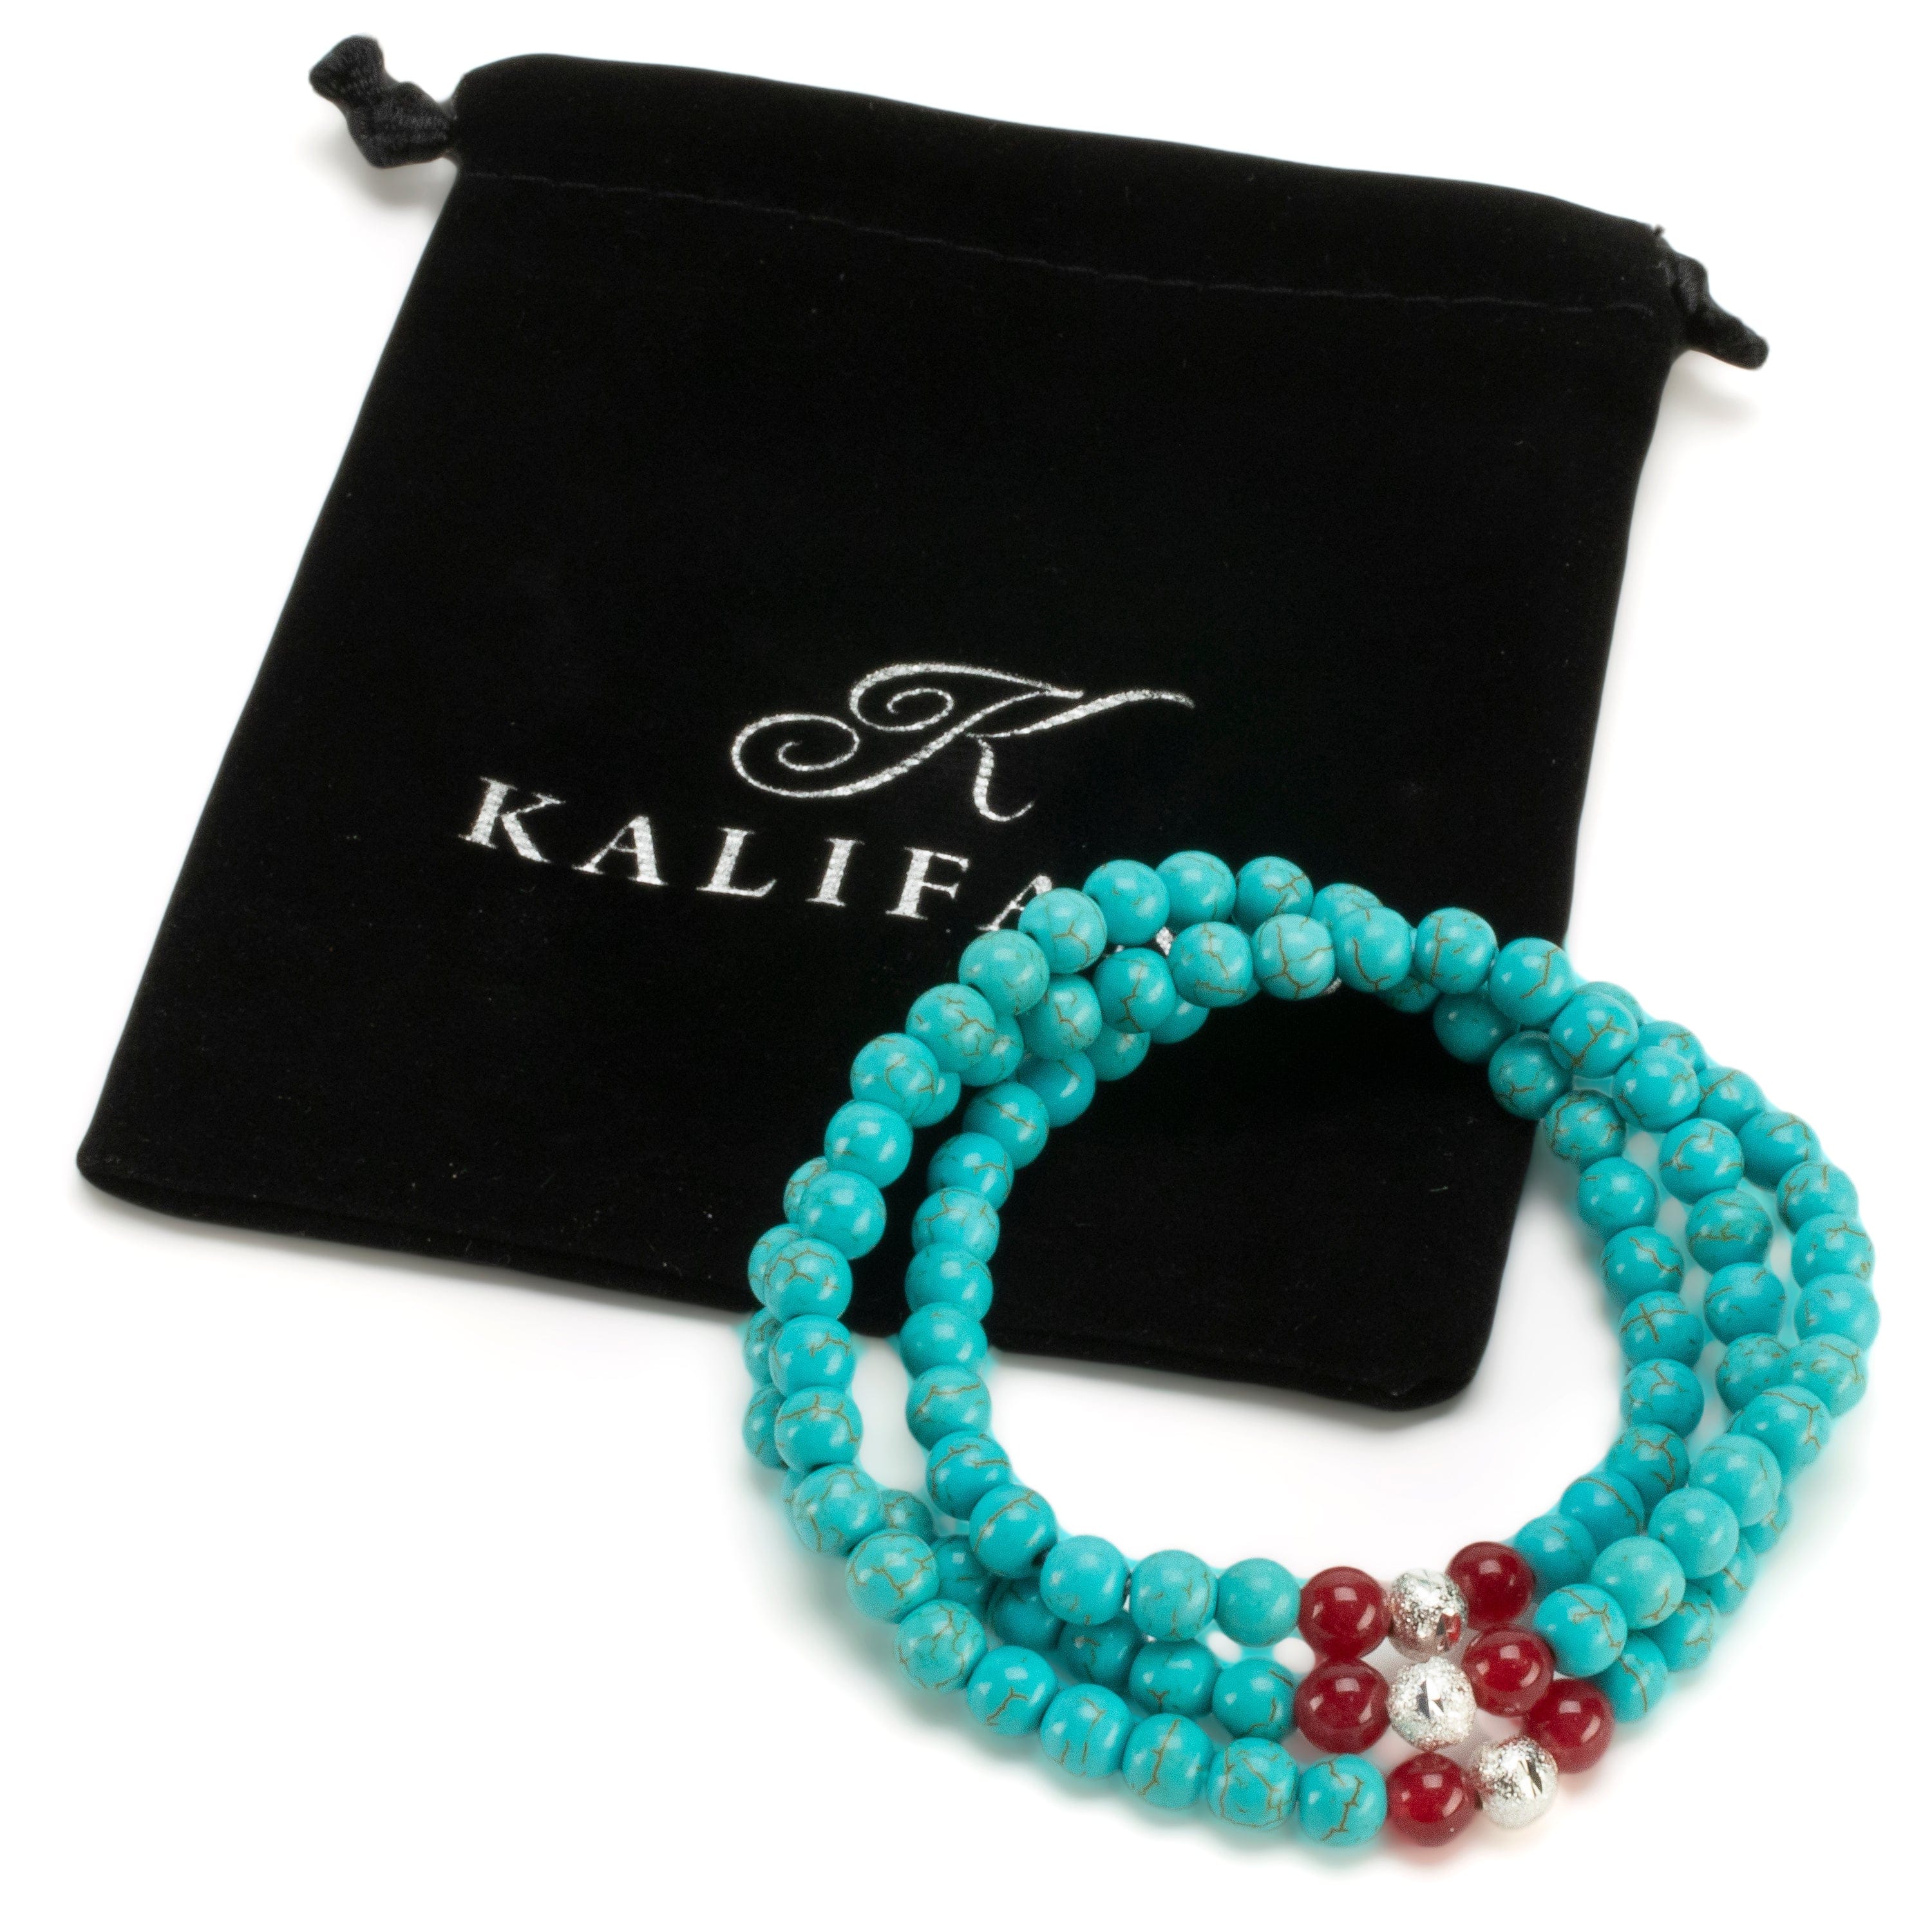 Kalifano Gemstone Bracelets Howlite Turquoise 6mm Beads with Red Agate & Silver Sparkly Accent Beads Triple Wrap Gemstone Elastic Bracelet WHITE-BGI3-088